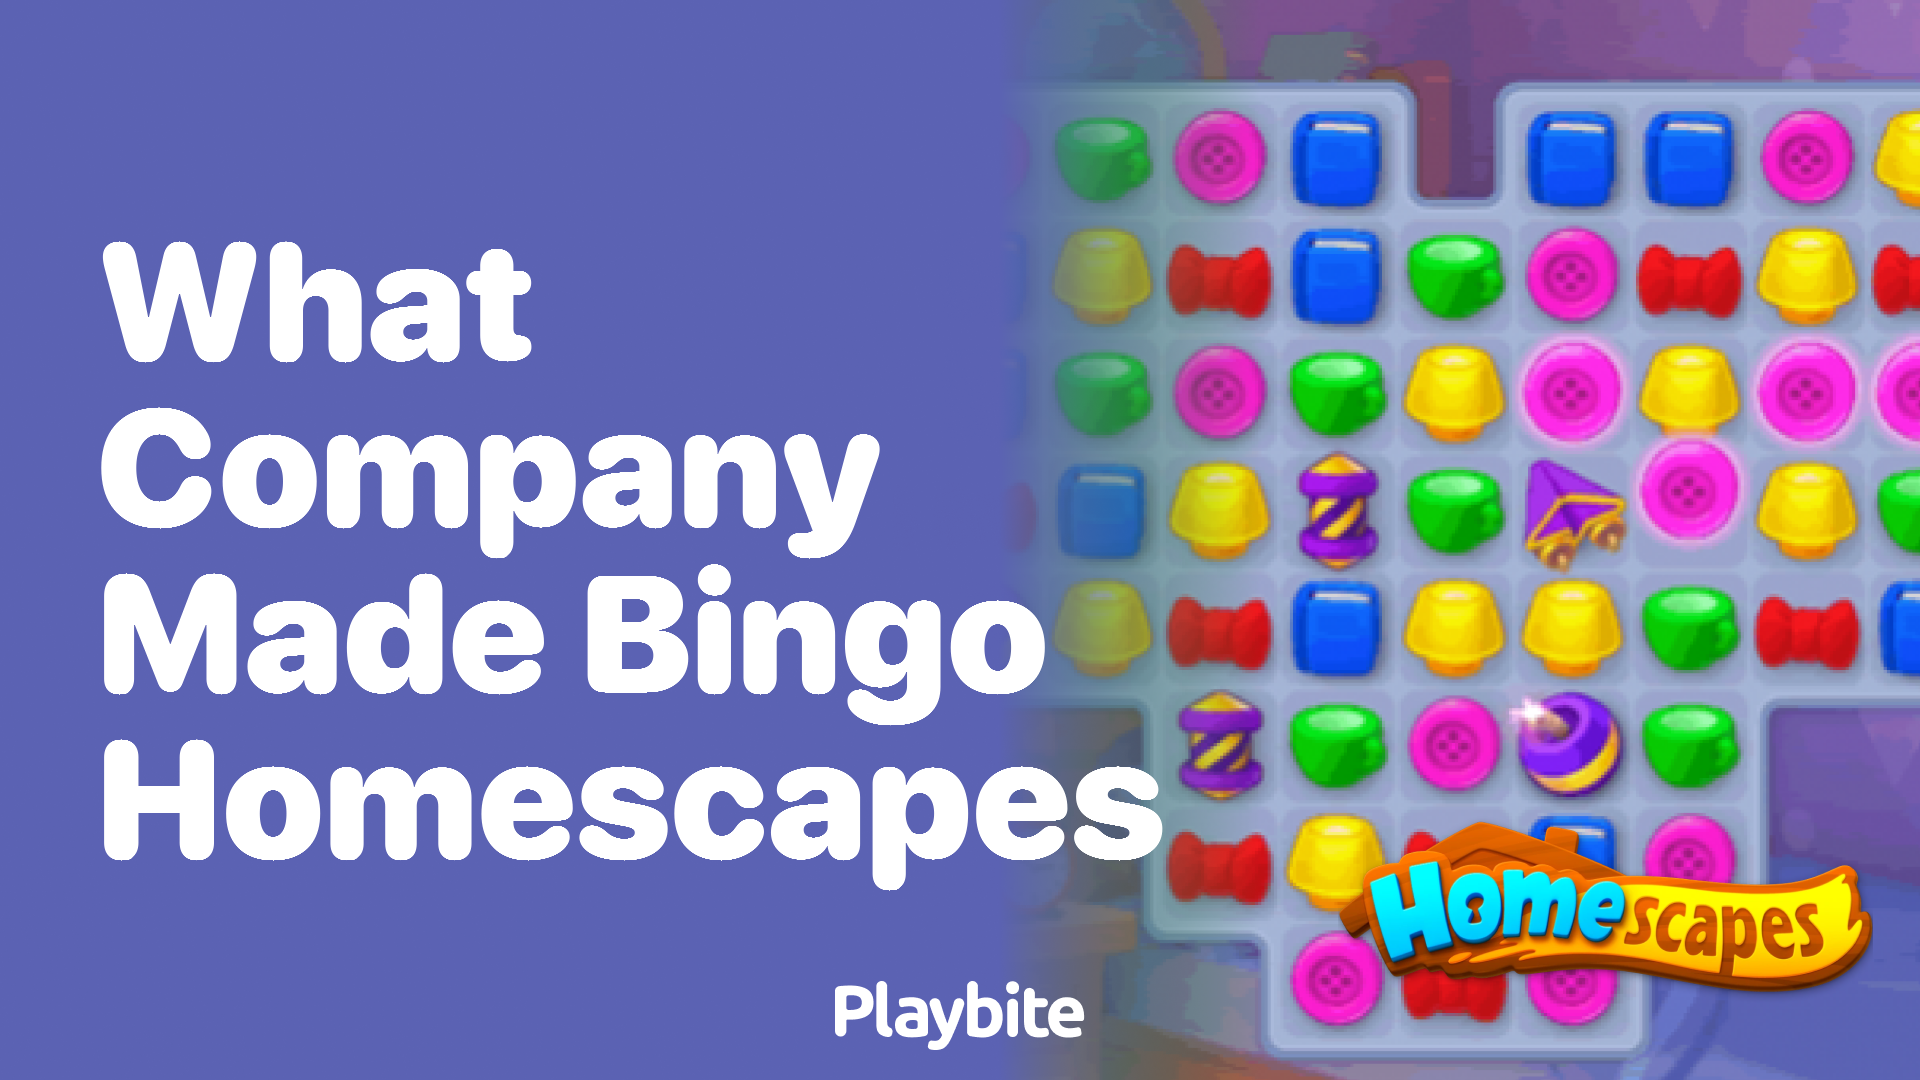 What company developed Bingo Homescapes?